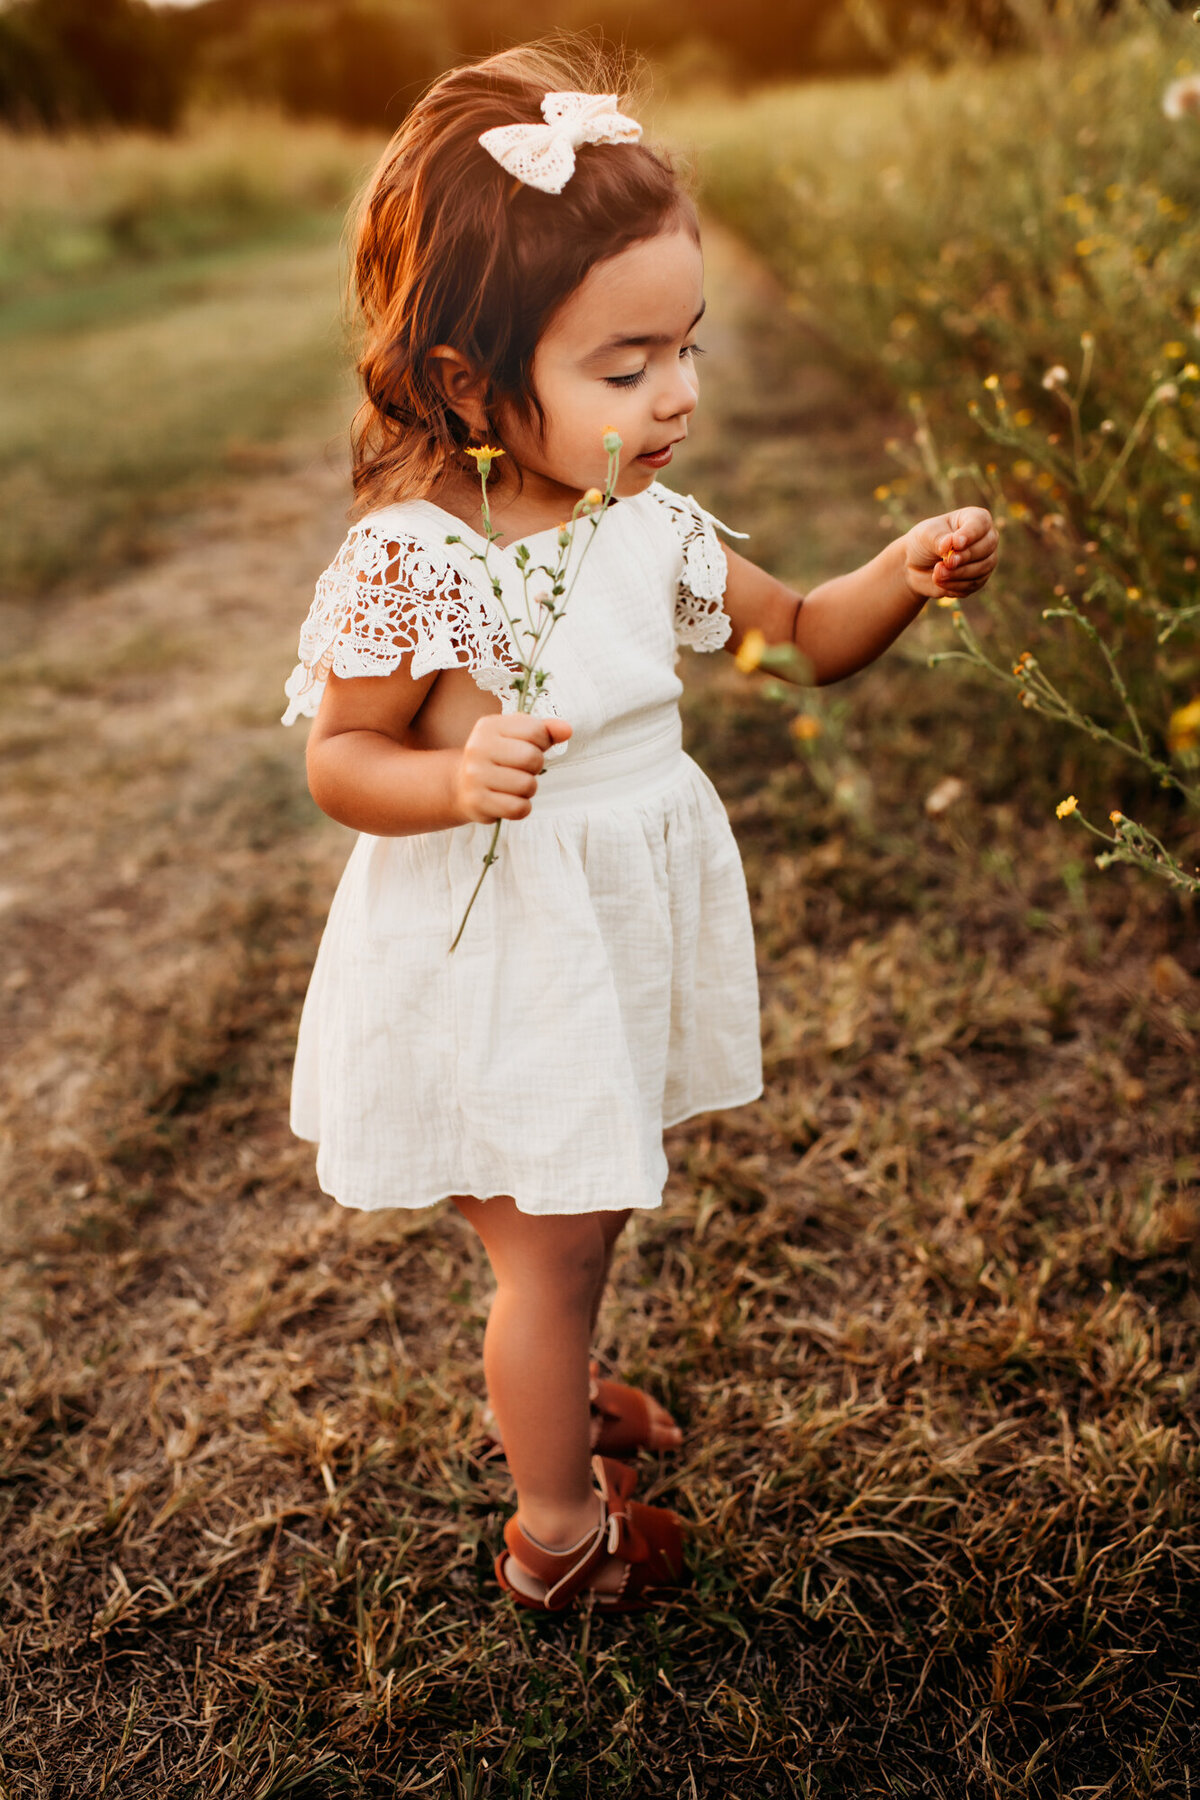 Little girl picking flowers in the sunset.